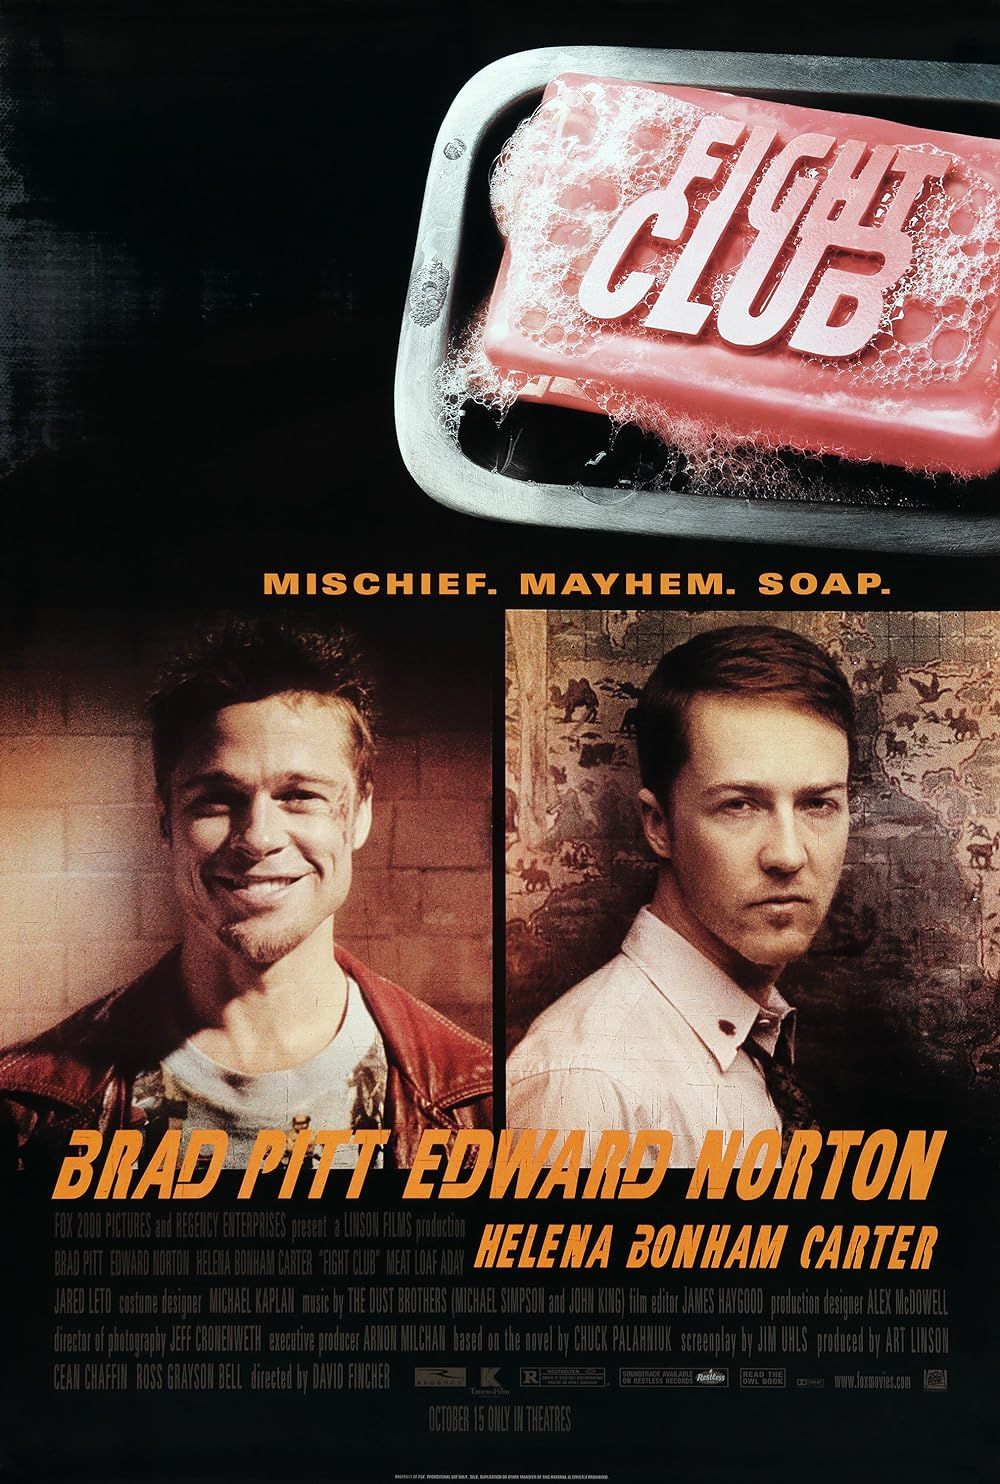 Brad Pitt and Edward Norton on the Fight Club movie poster